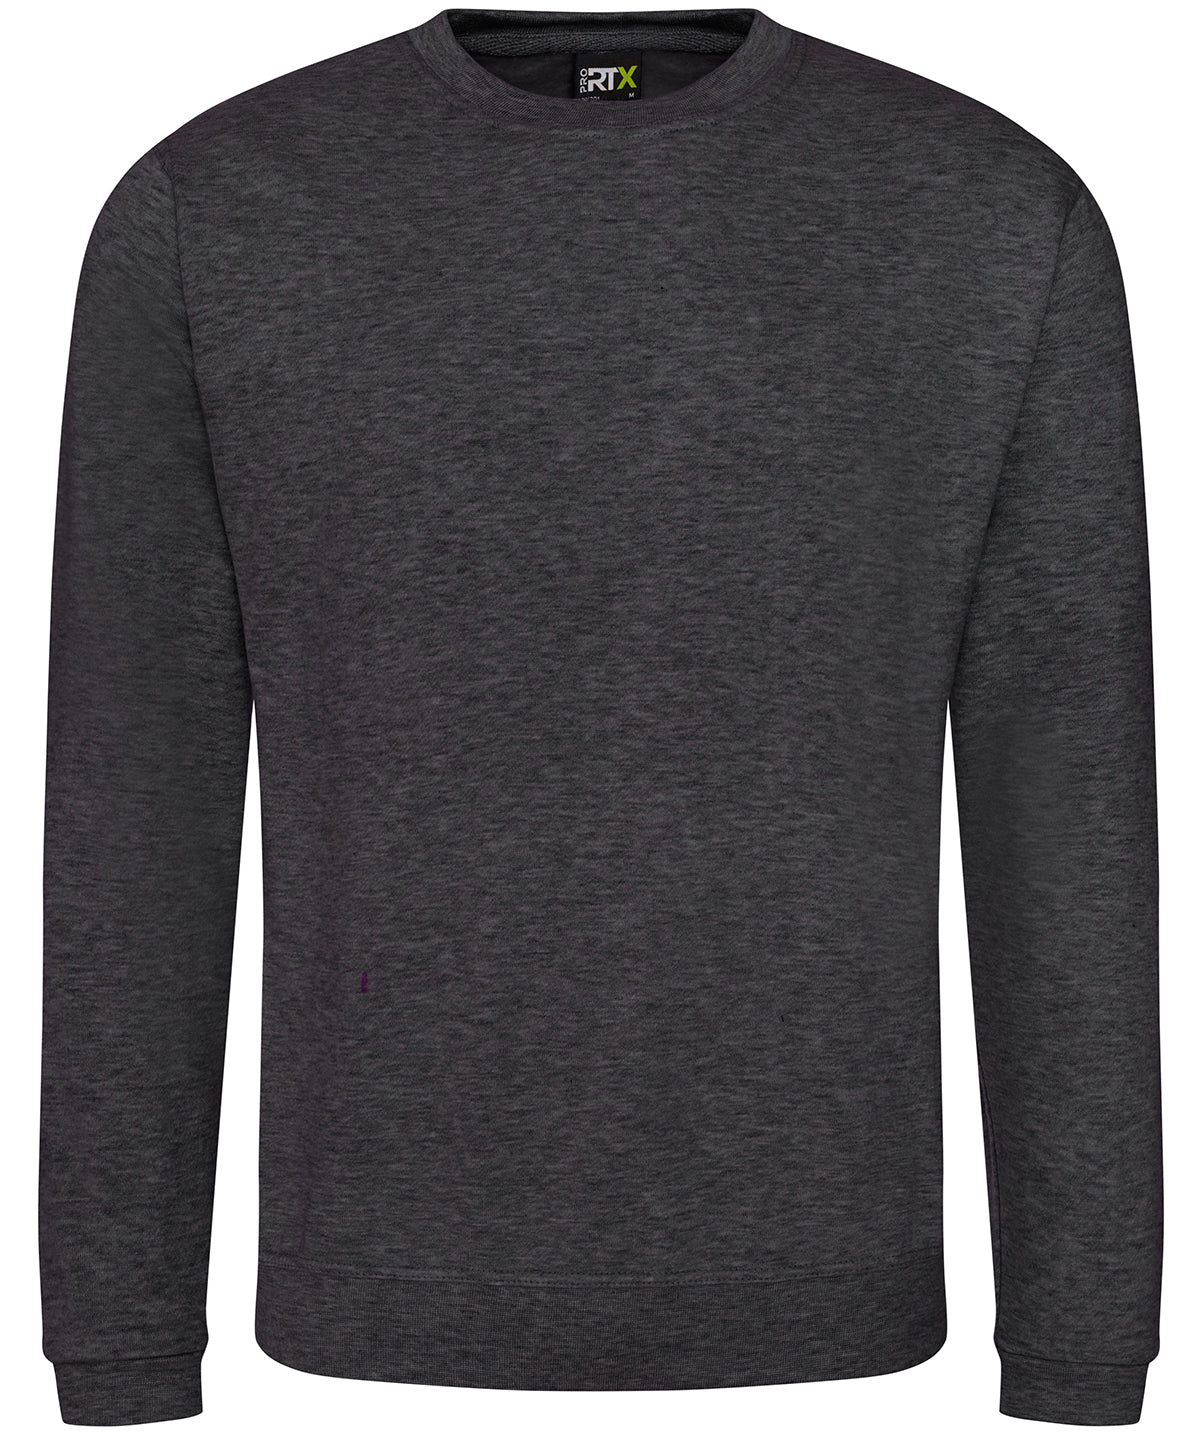 Pro sweatshirt sizes S-XL